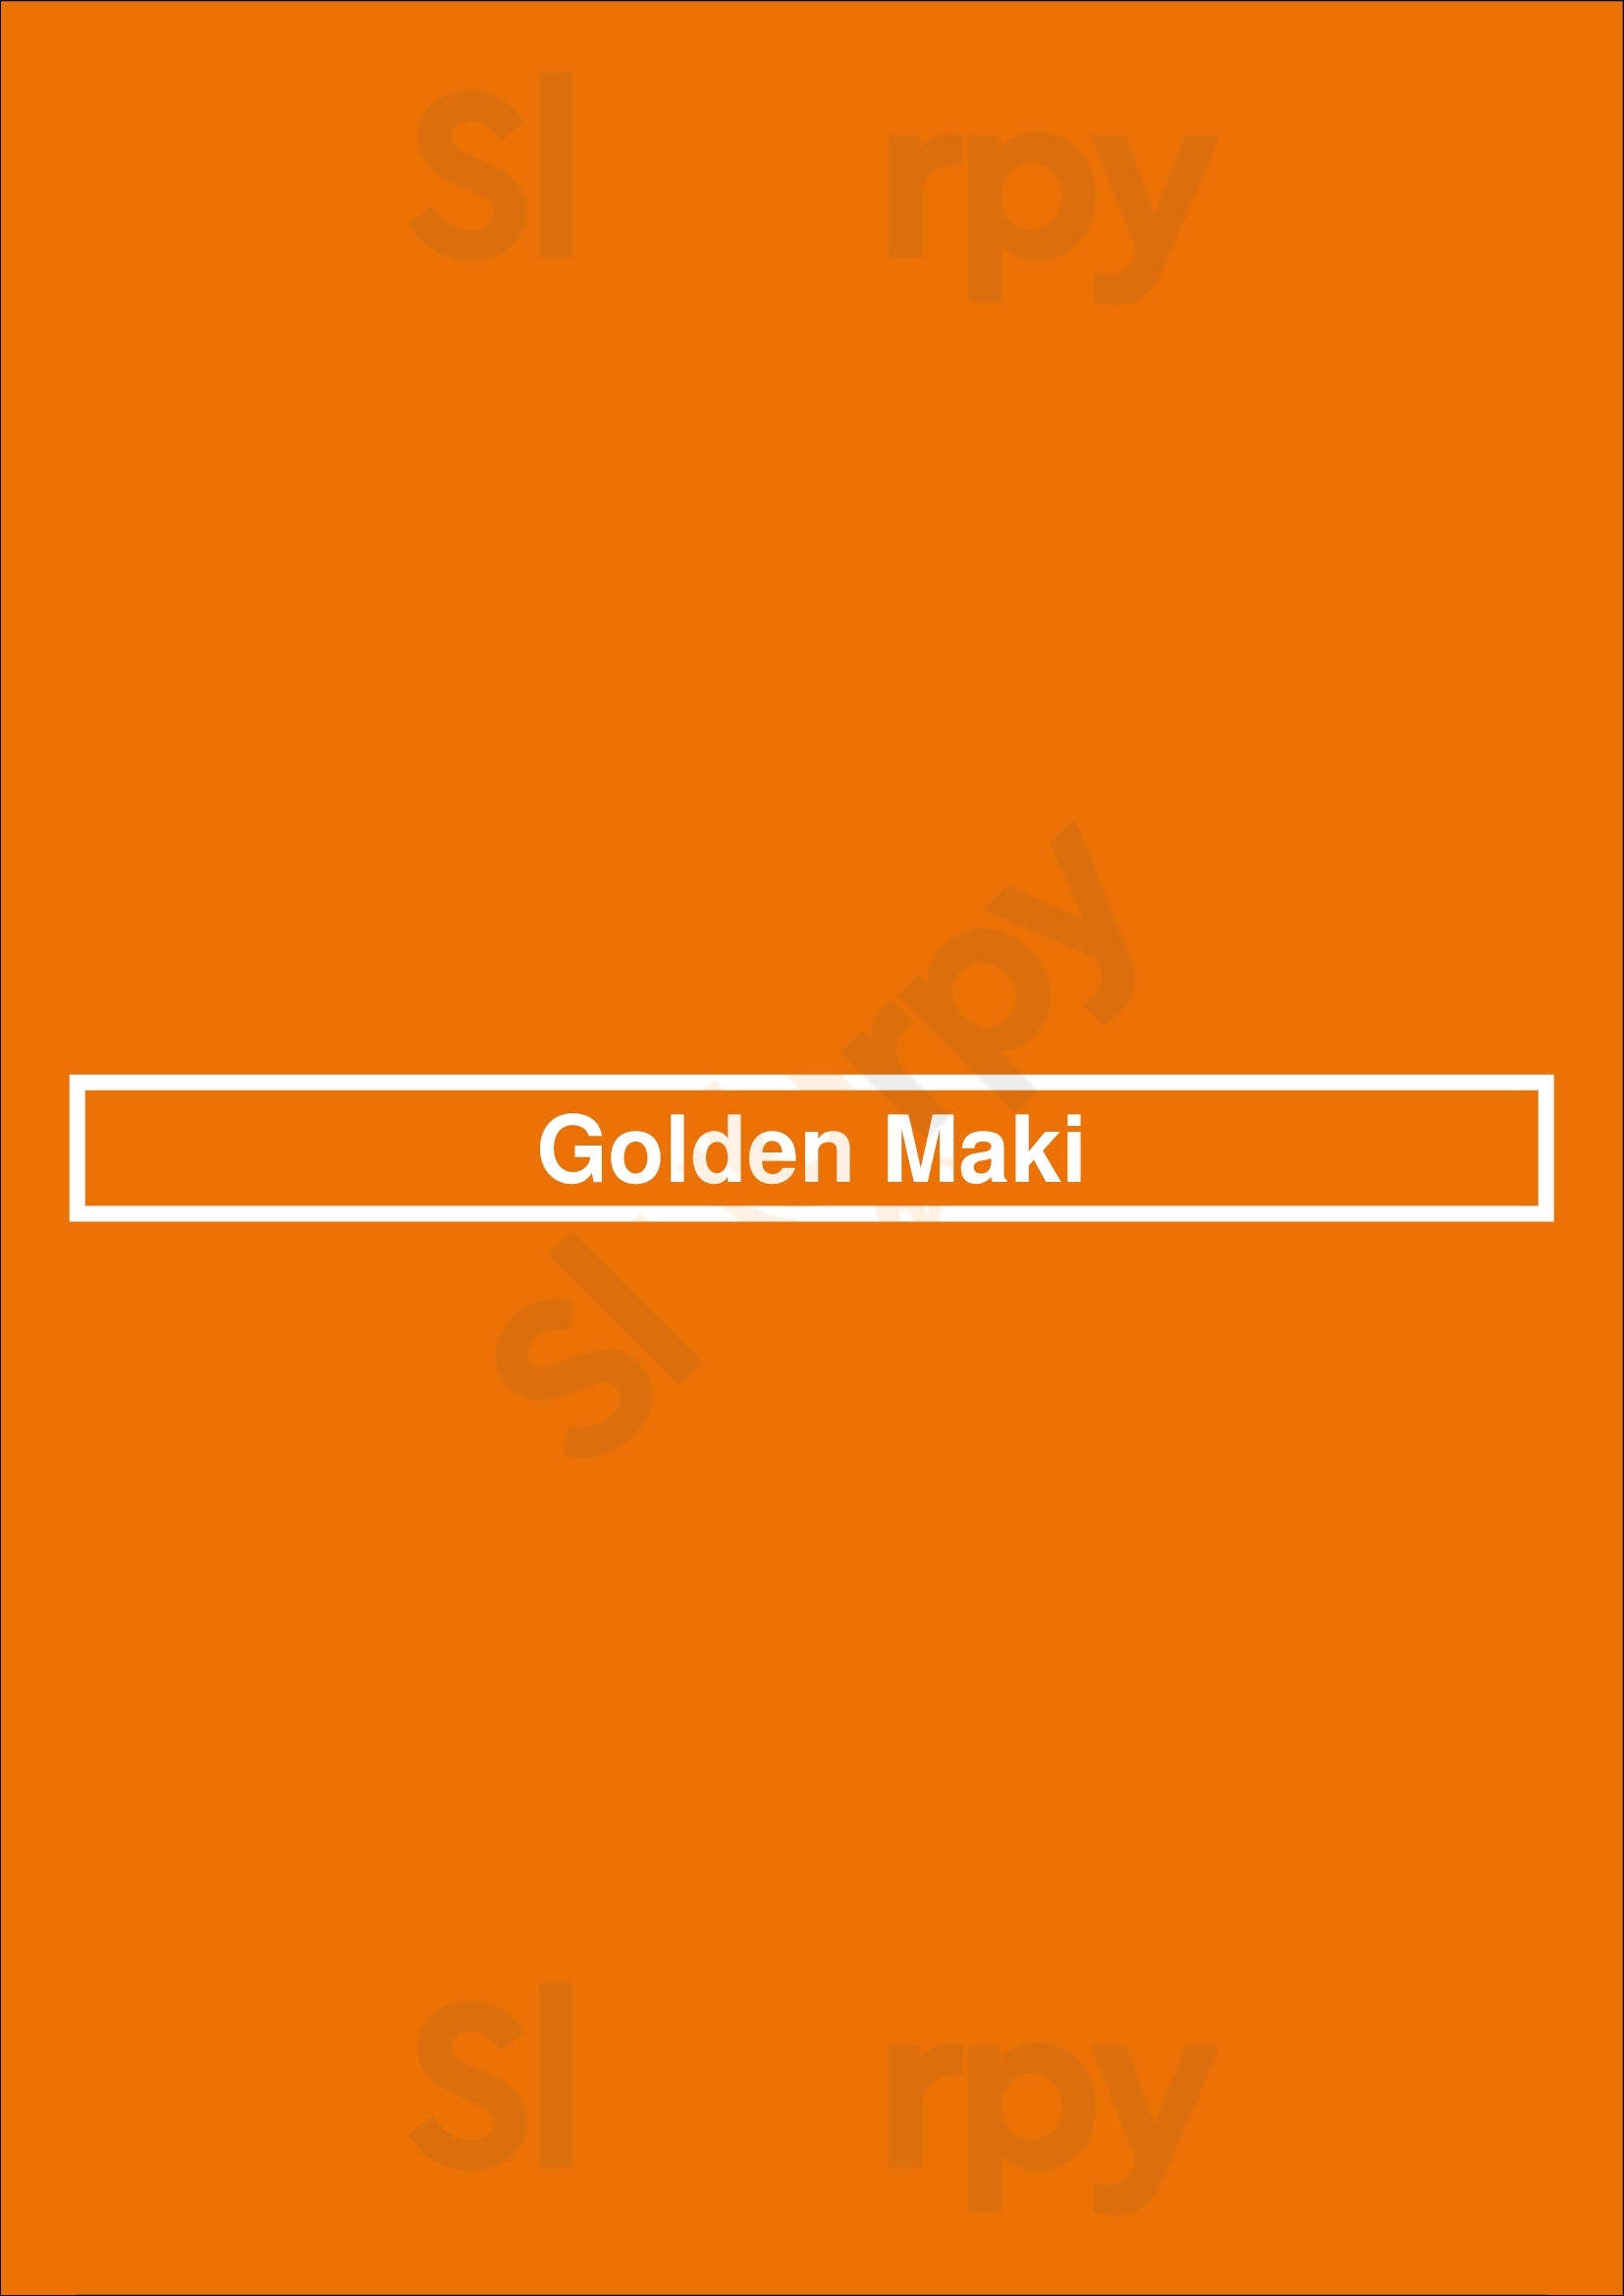 Golden Maki Newmarket Menu - 1